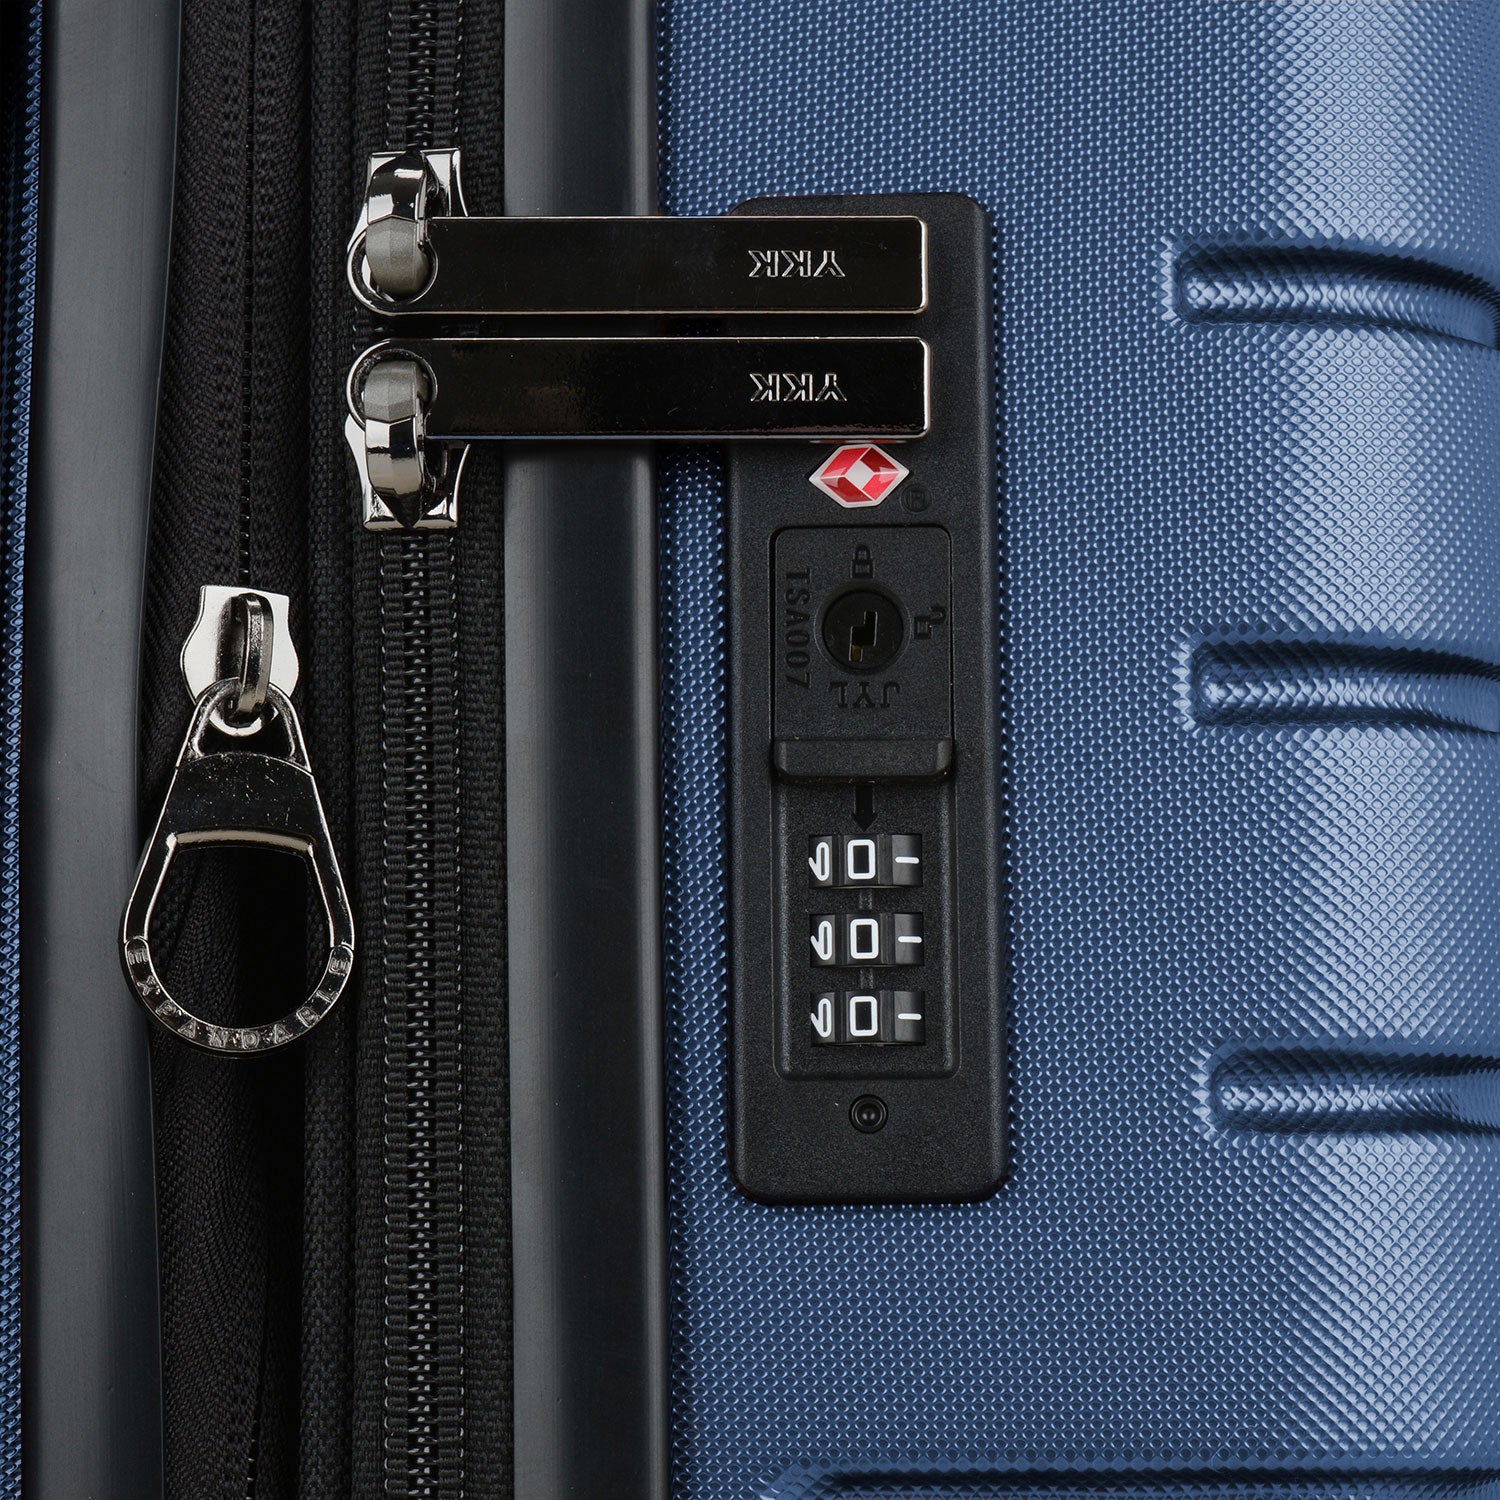 Large 30” Hardcase Luggage With TSA Lock And Double Spinner Wheels